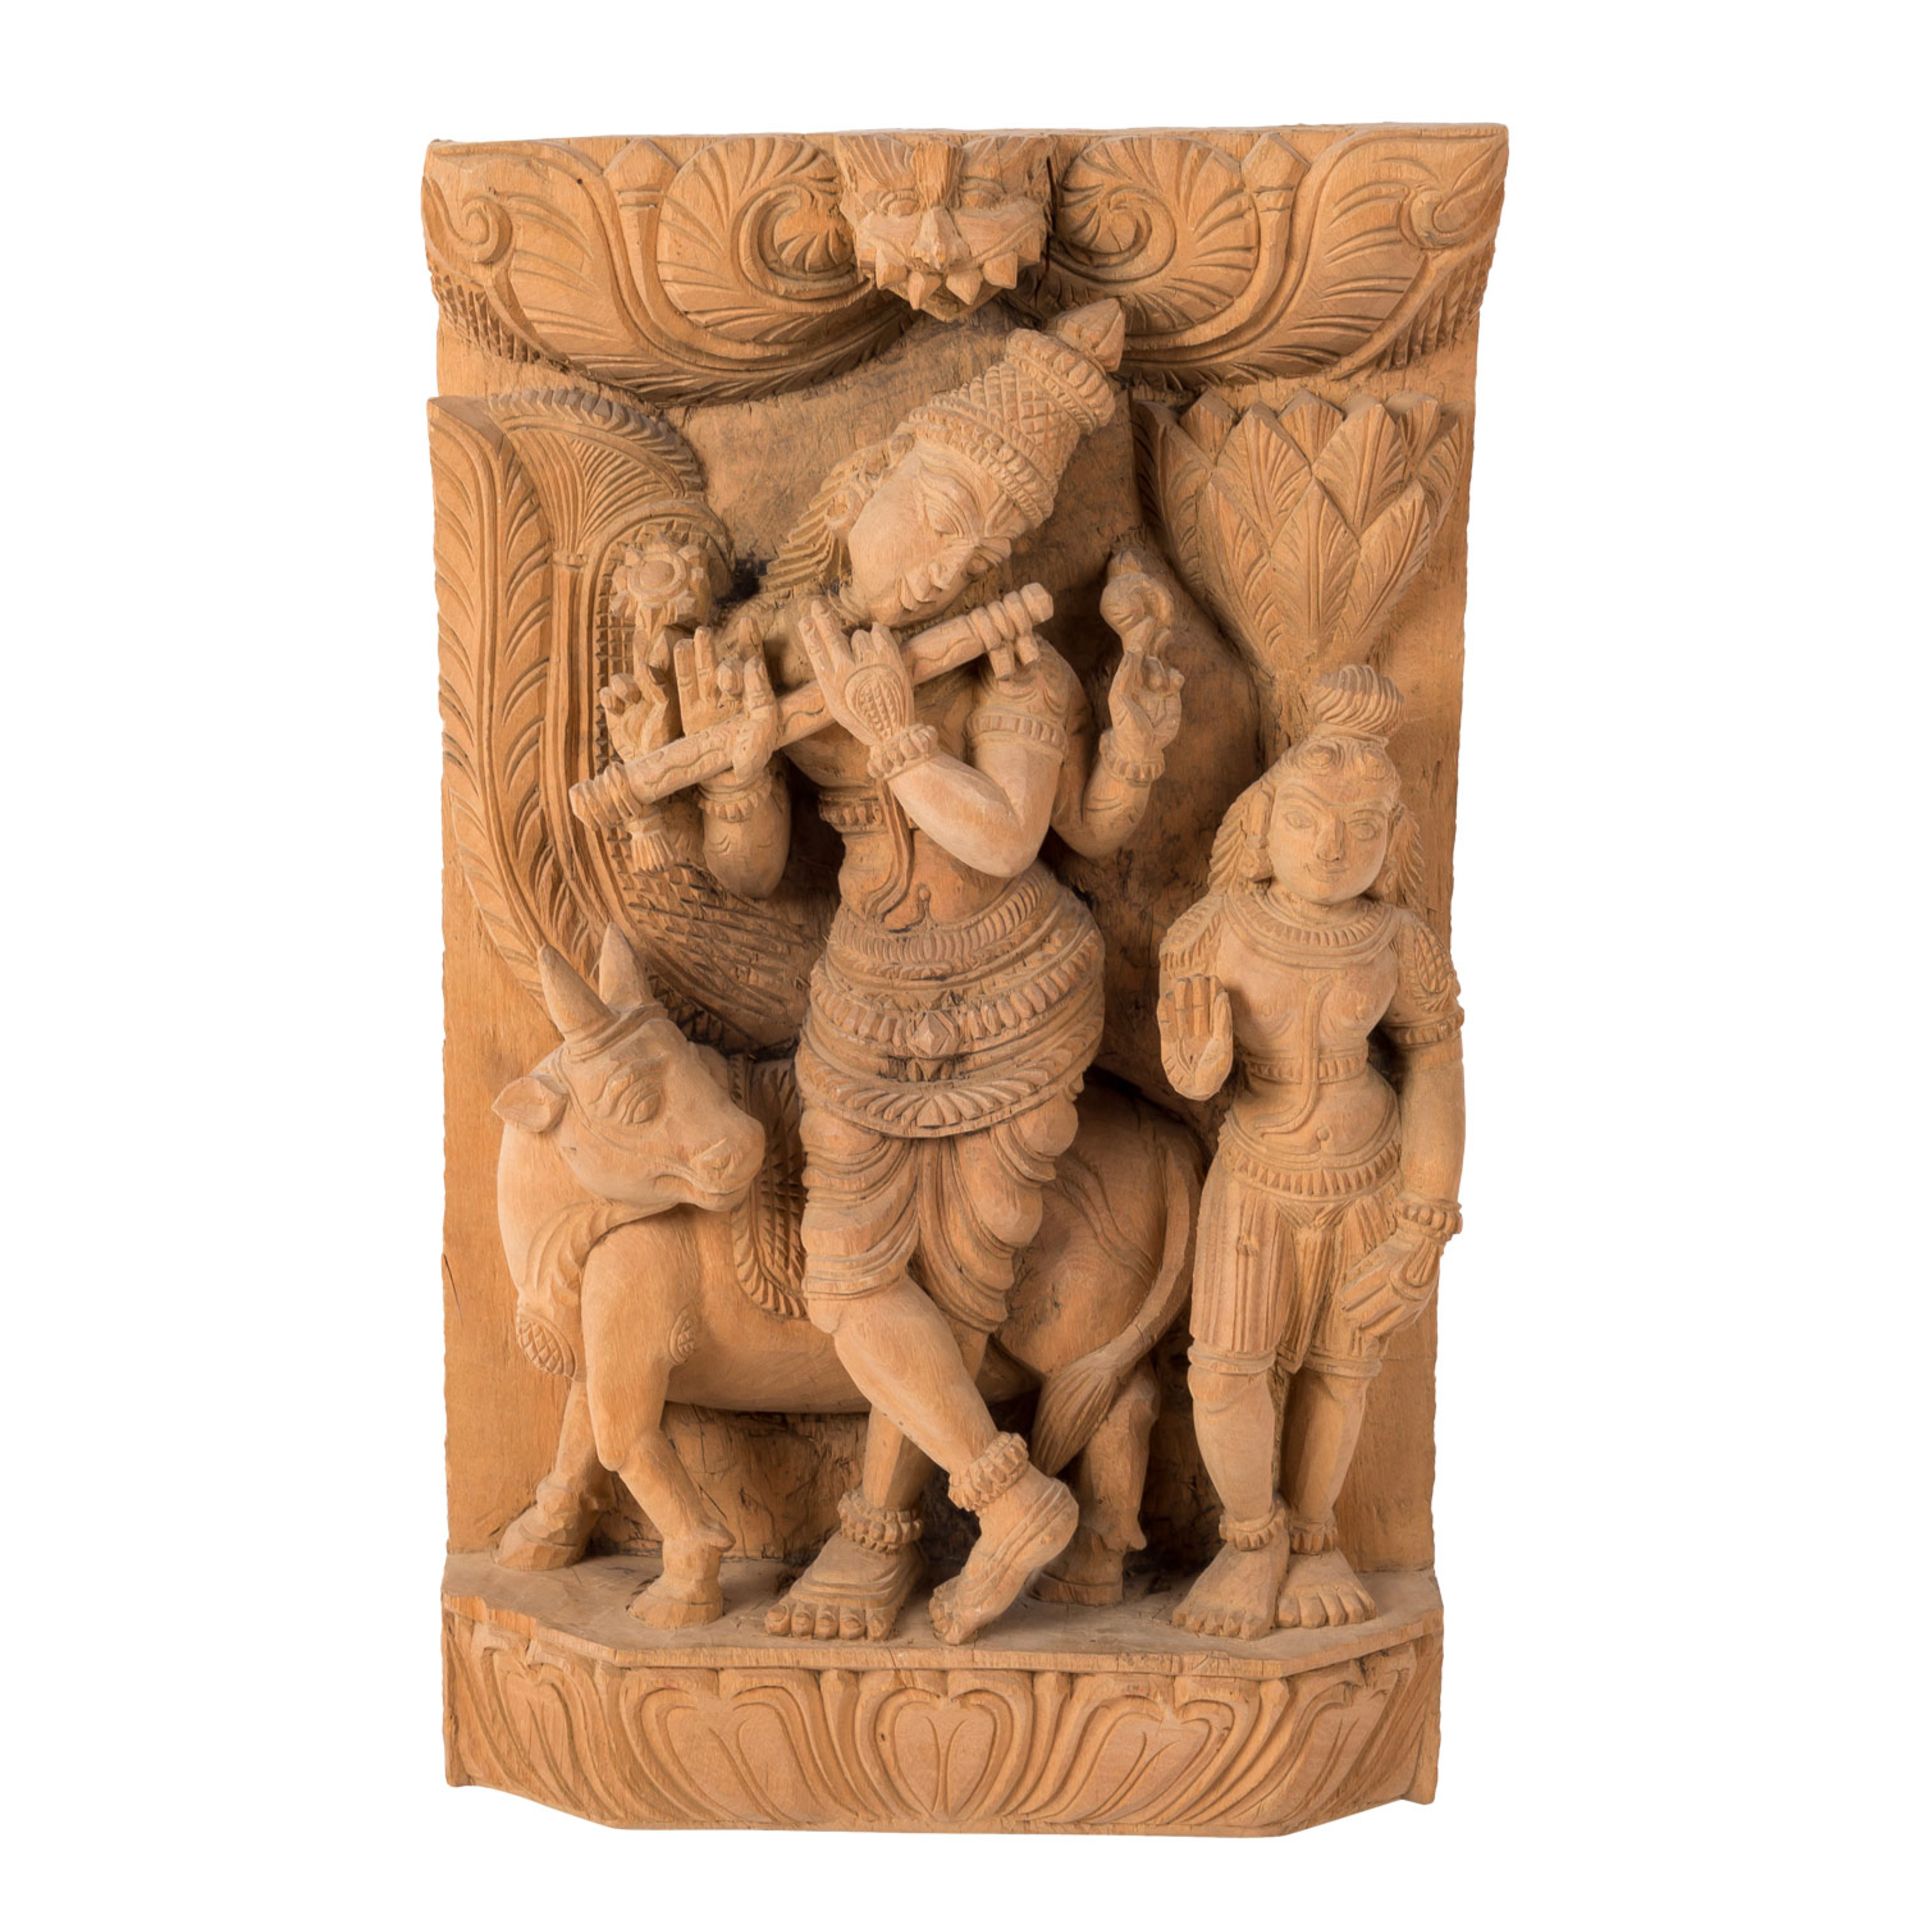 2 Reliefschnitzereien aus Holz. INDIEN, 20. Jh.: - Image 5 of 8